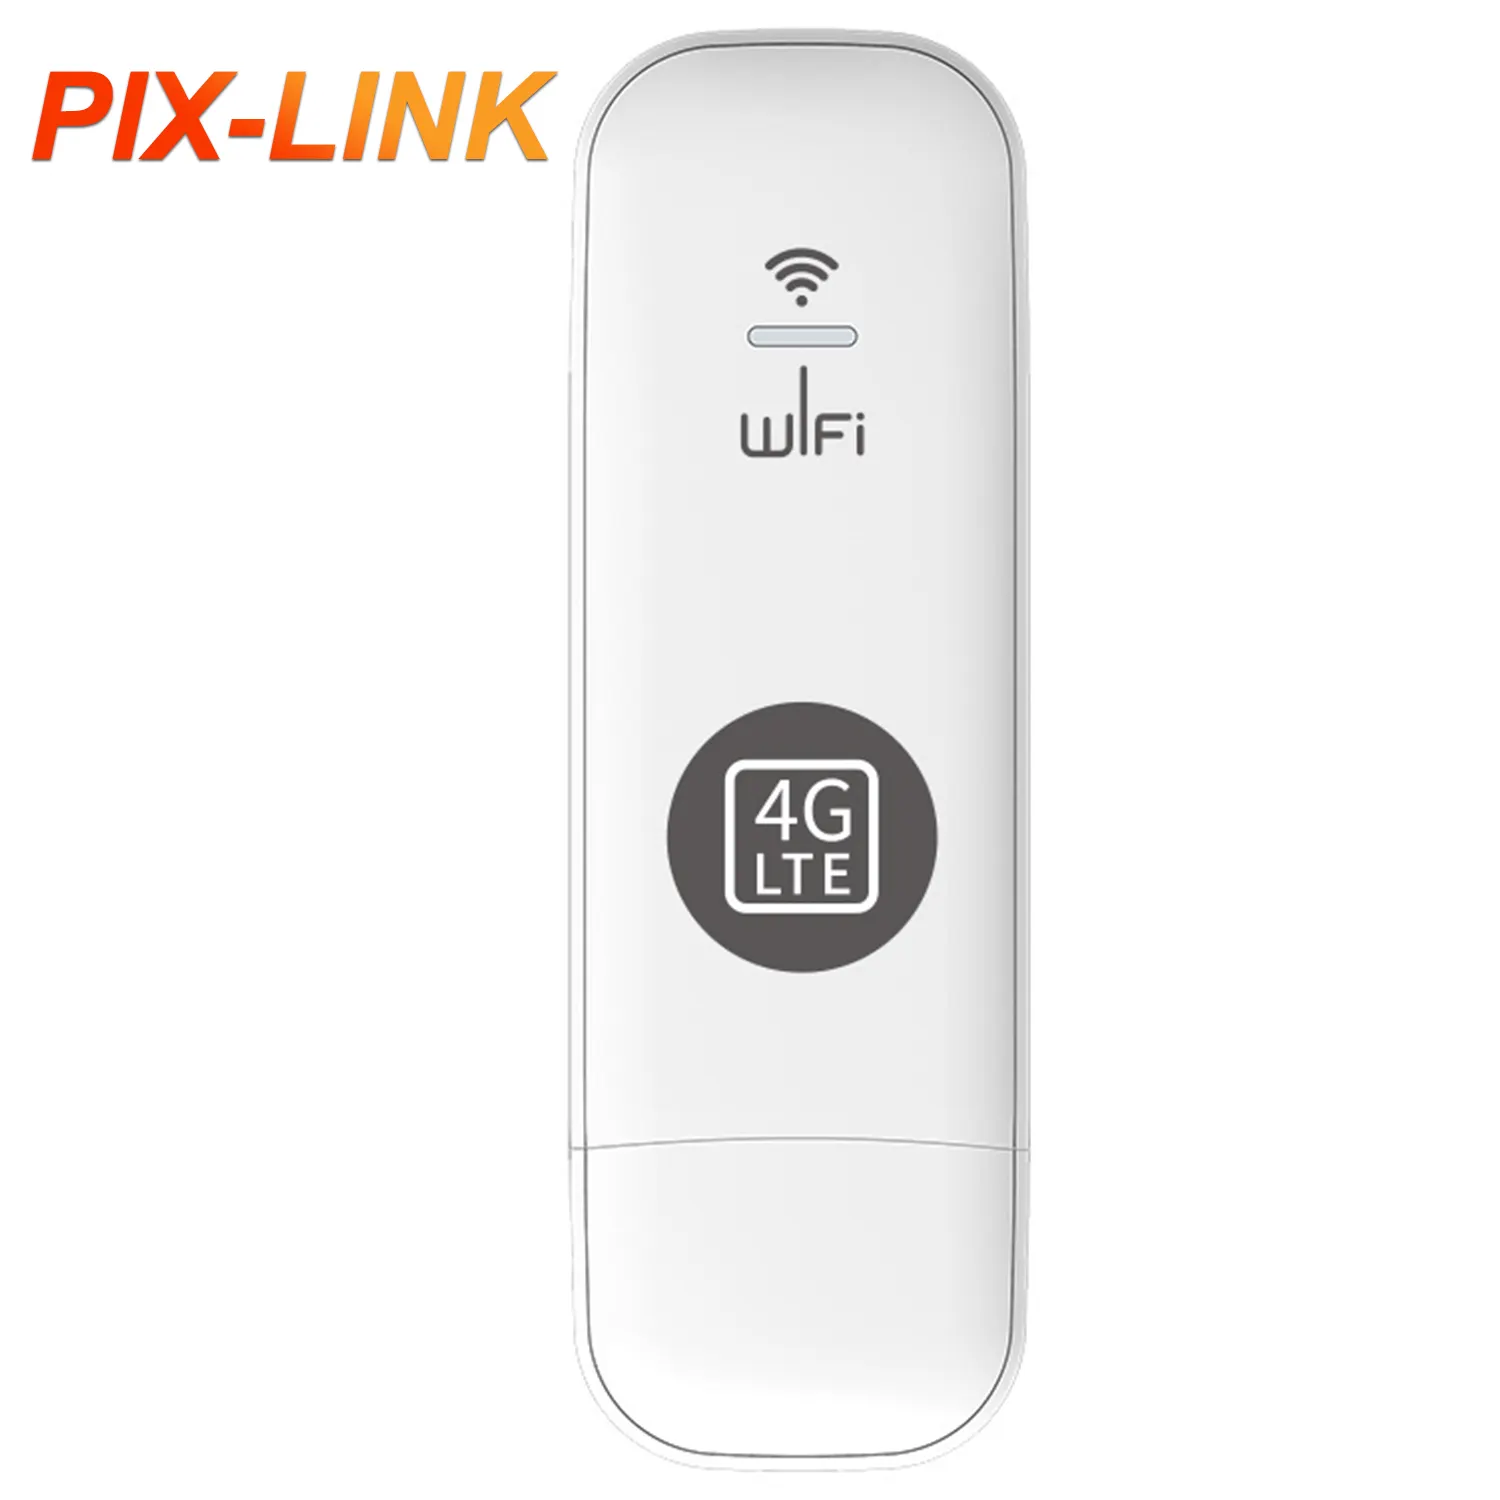 PIX-LINK Global 4g usb Wi-Fi Moboile по Заводской Цене lte беспроводной маршрутизатор wifi Wingle Hotspot LTE Usb модем интернет карманная карта Wifi